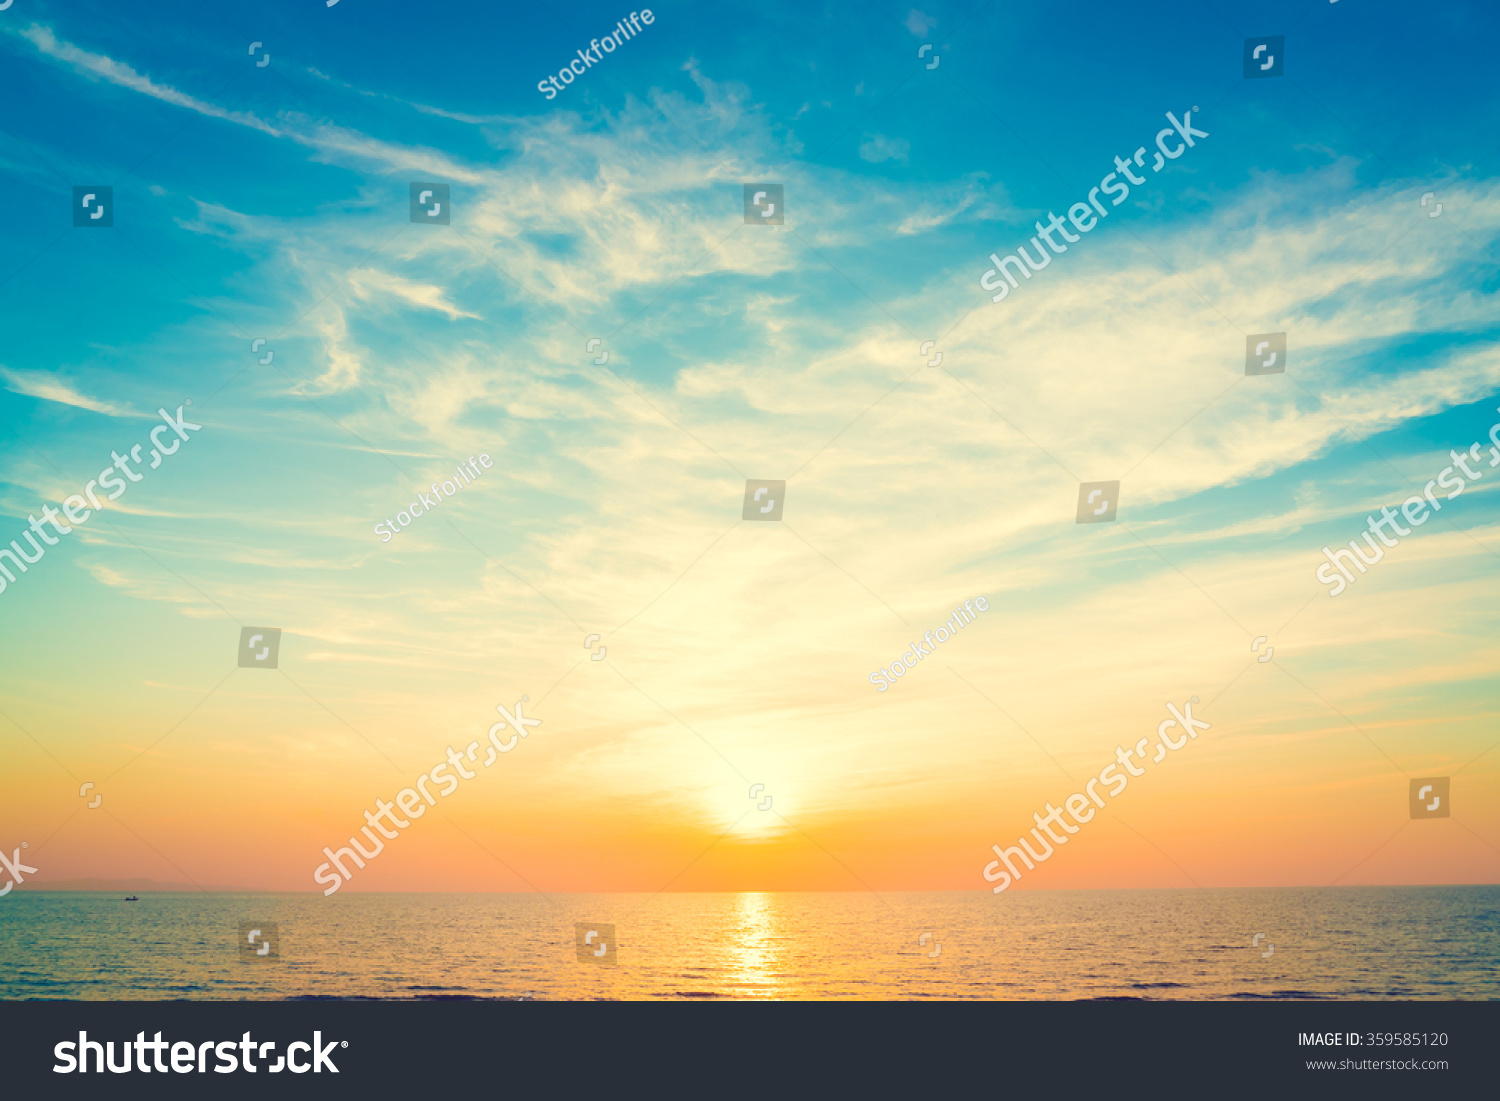 Beautiful sunset on the sea at twilight times - Vintage Filter #359585120